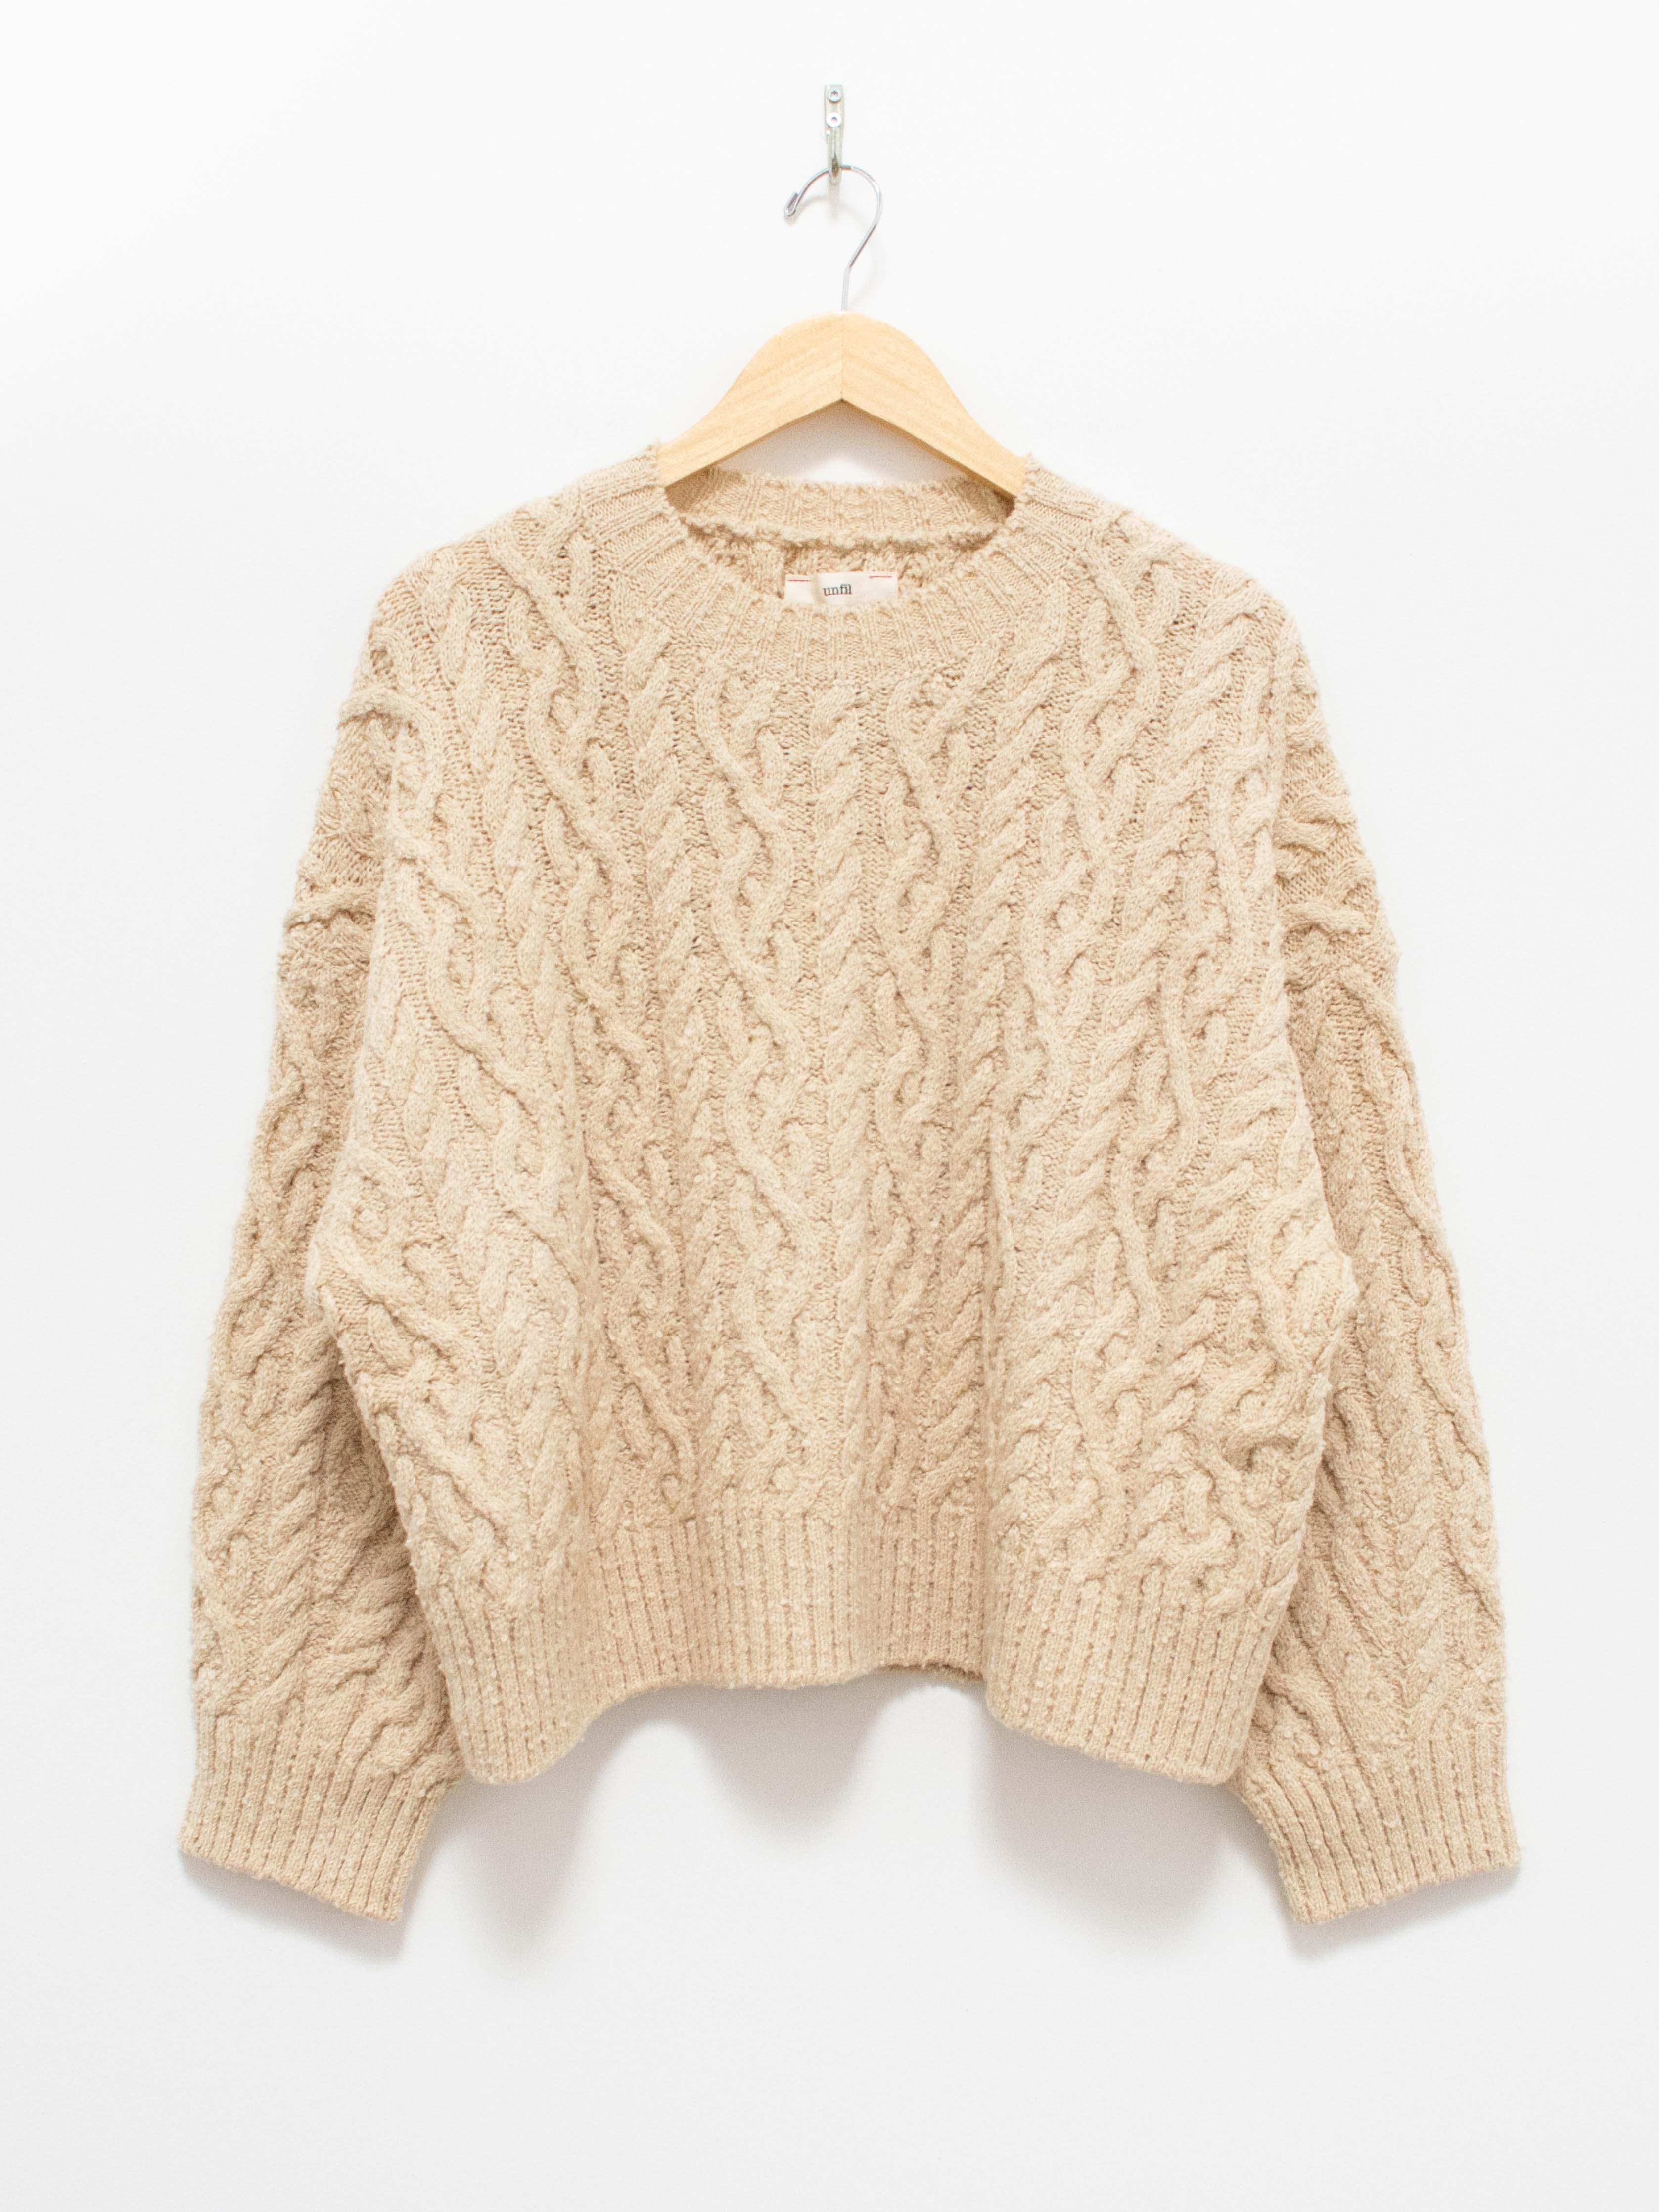 Namu Shop - Unfil French Merino Cotton Boucle Cable Knit Sweater - Ecru